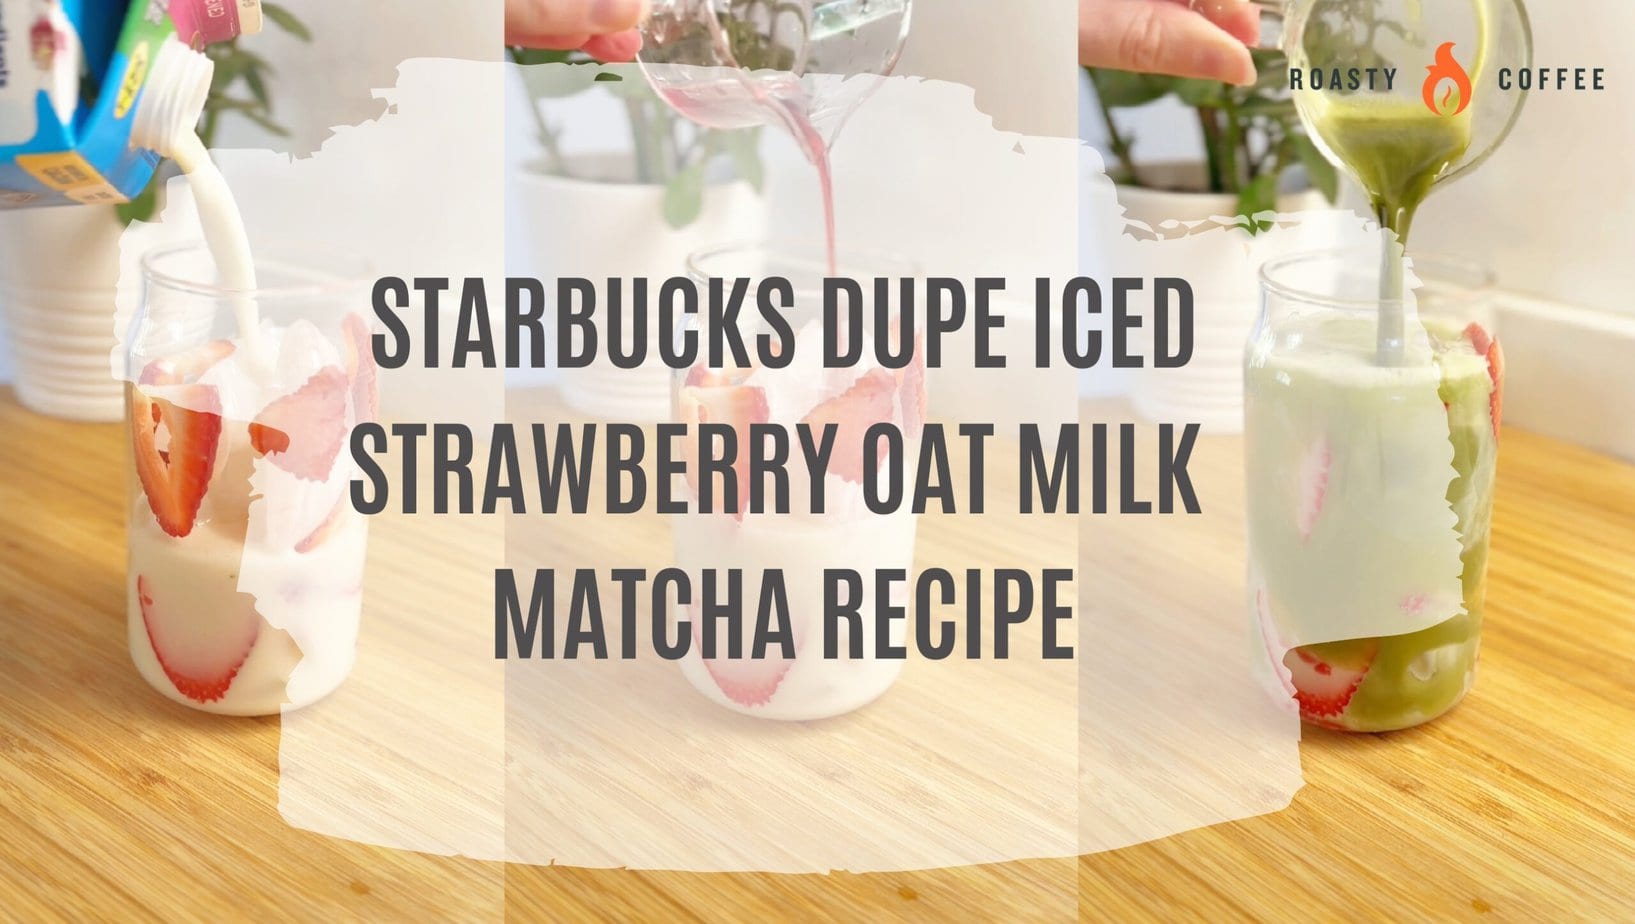 Starbucks Dupe Iced Strawberry Oat Milk Matcha